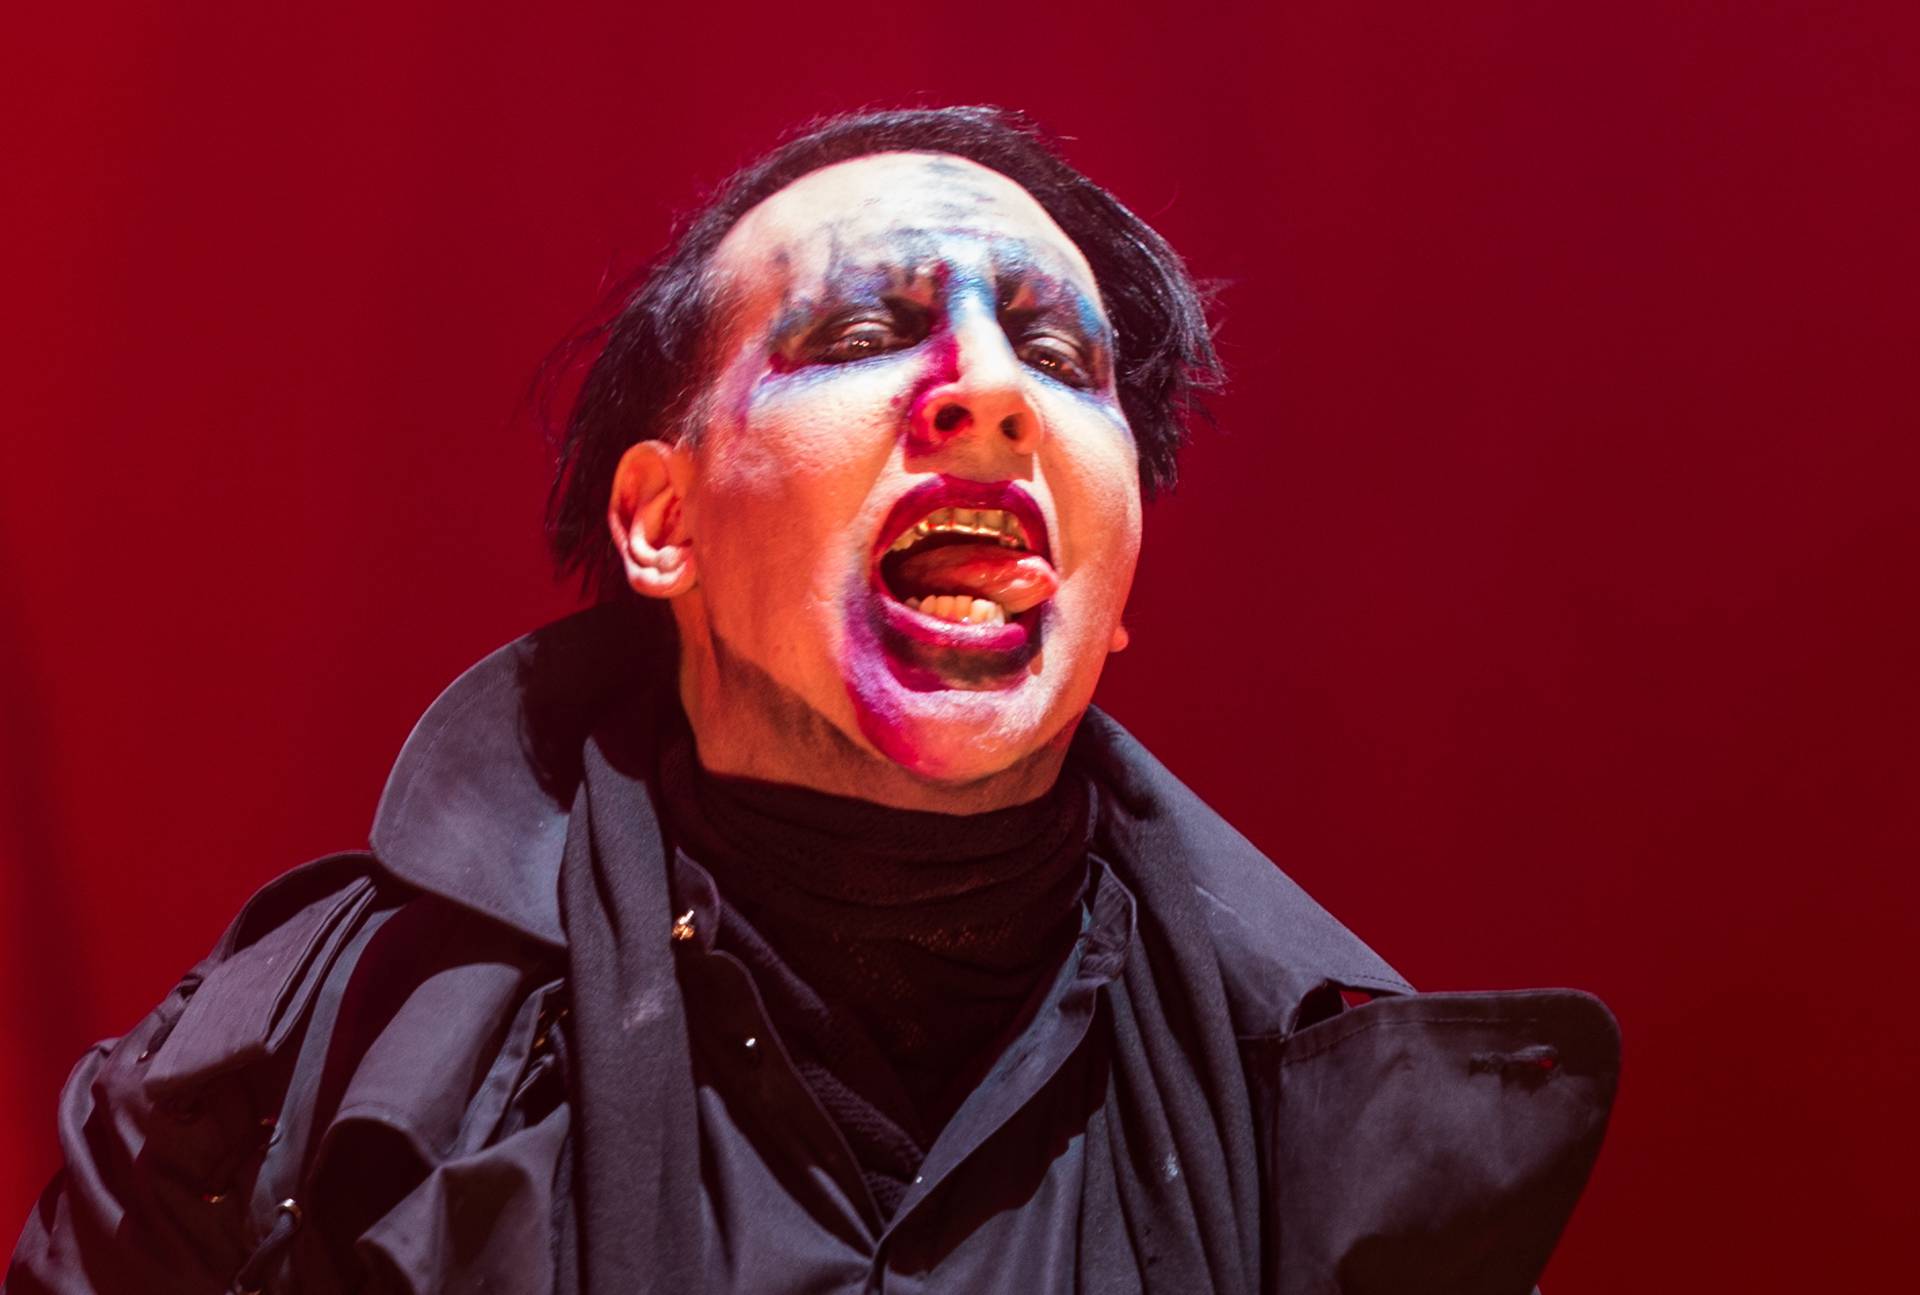 Wacken Open Air - Marilyn Manson